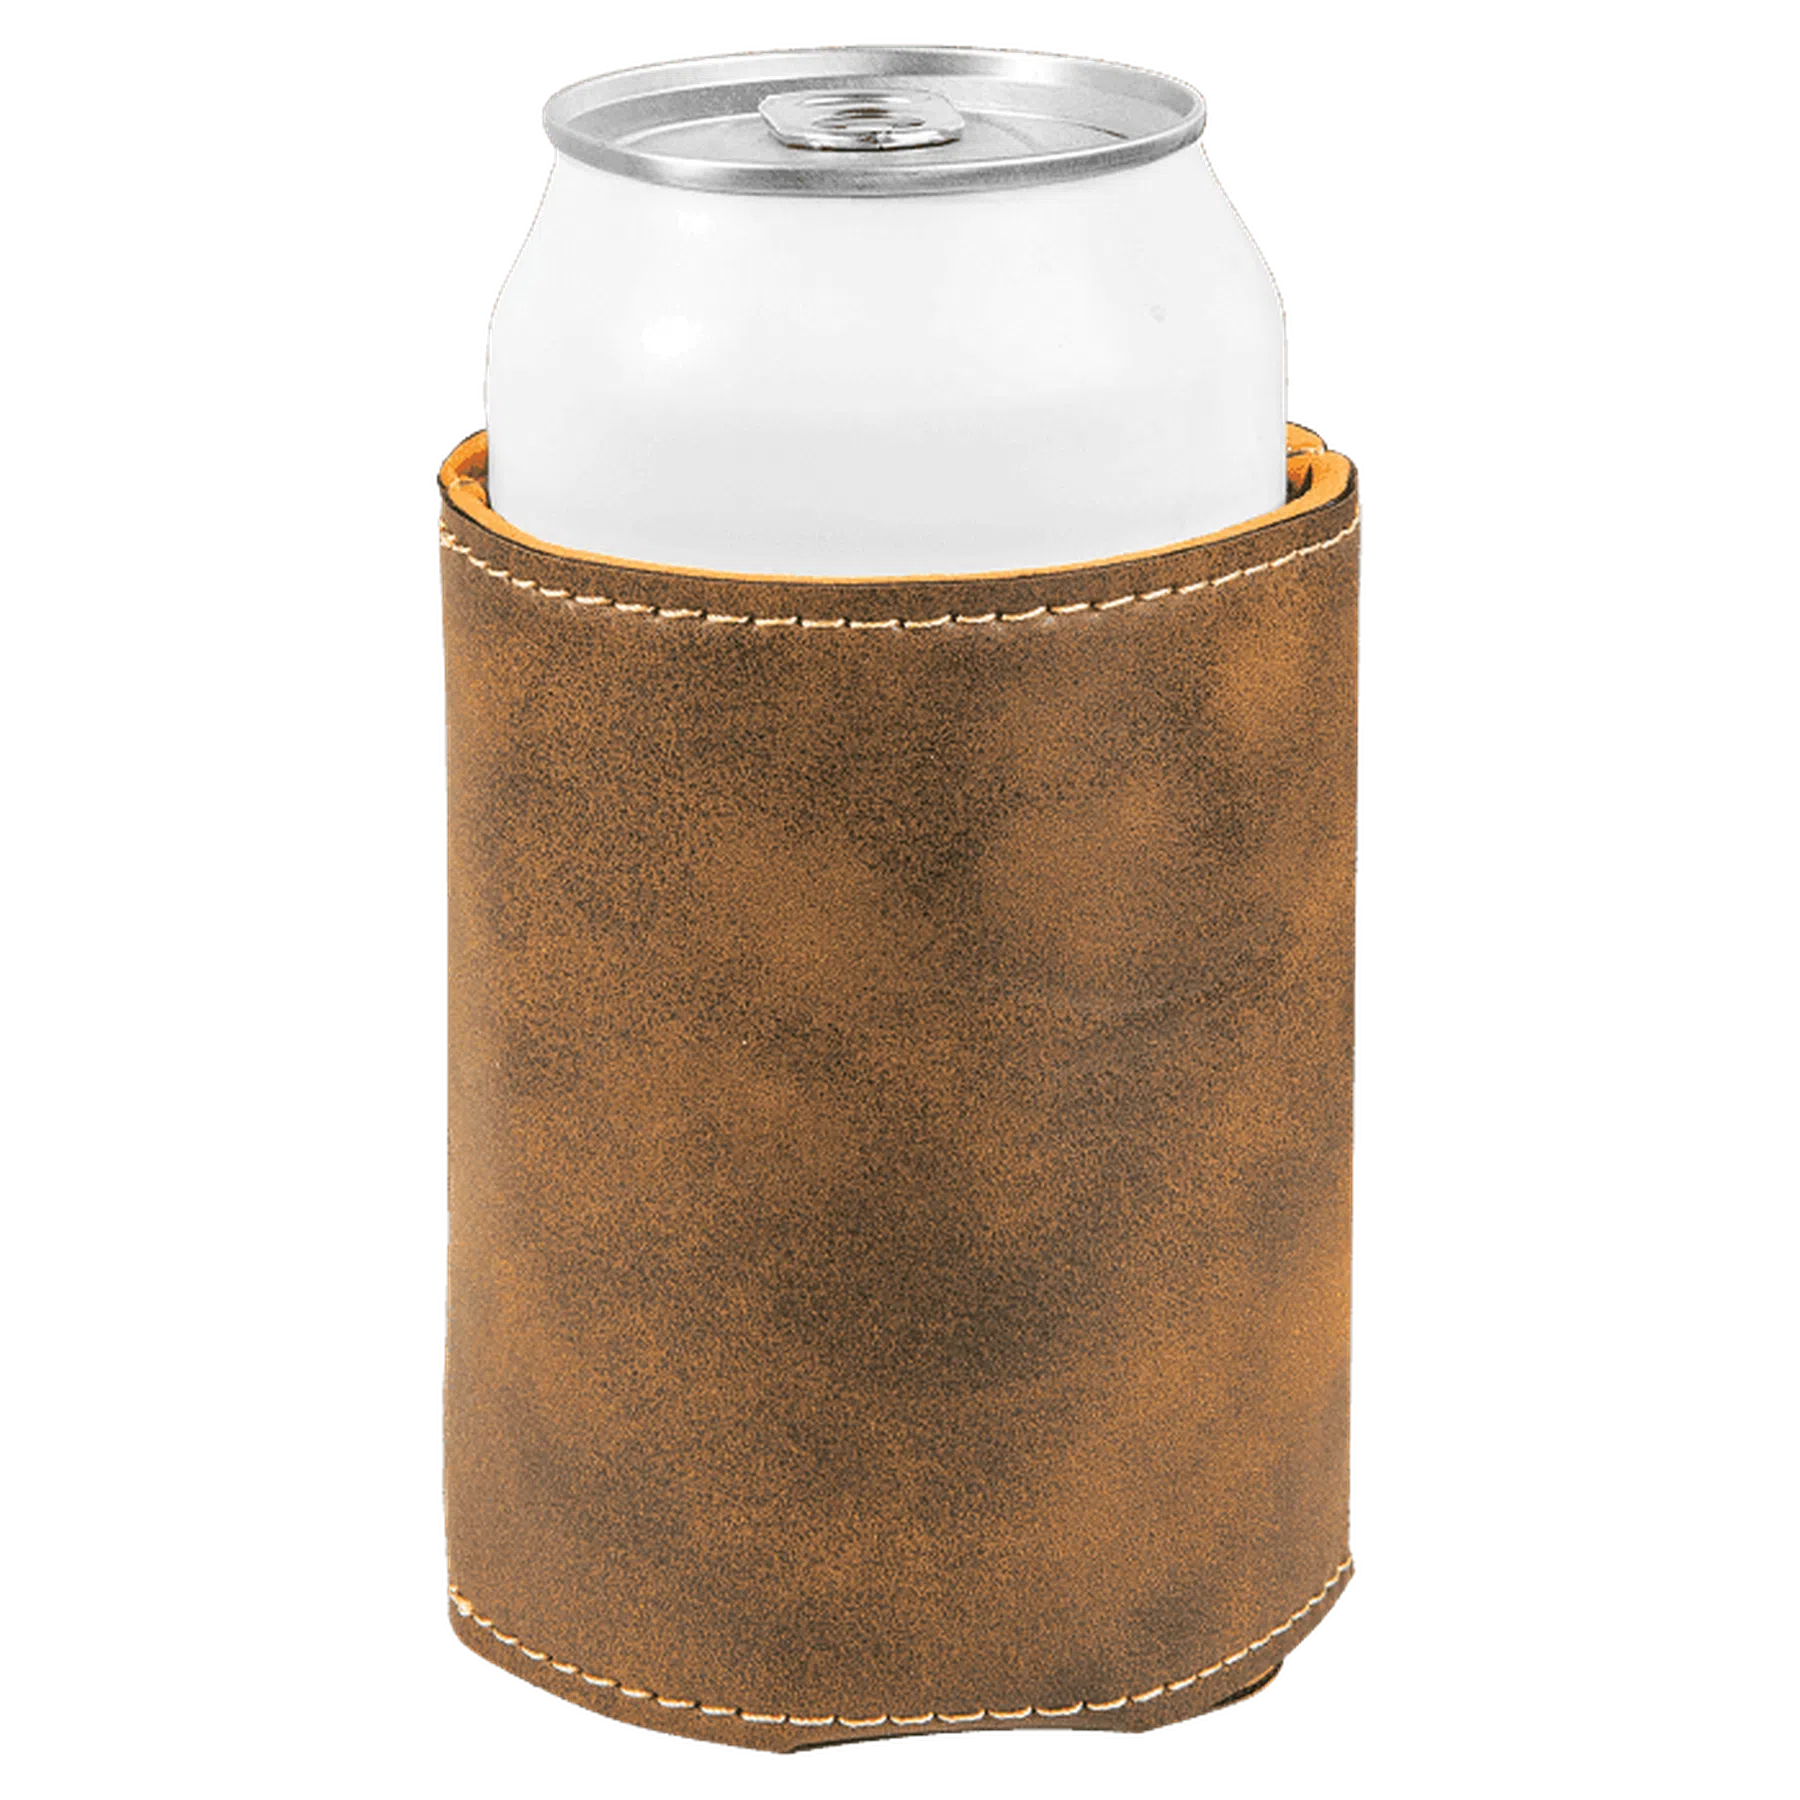 Leatherette Beverage Holder (Various Colors)